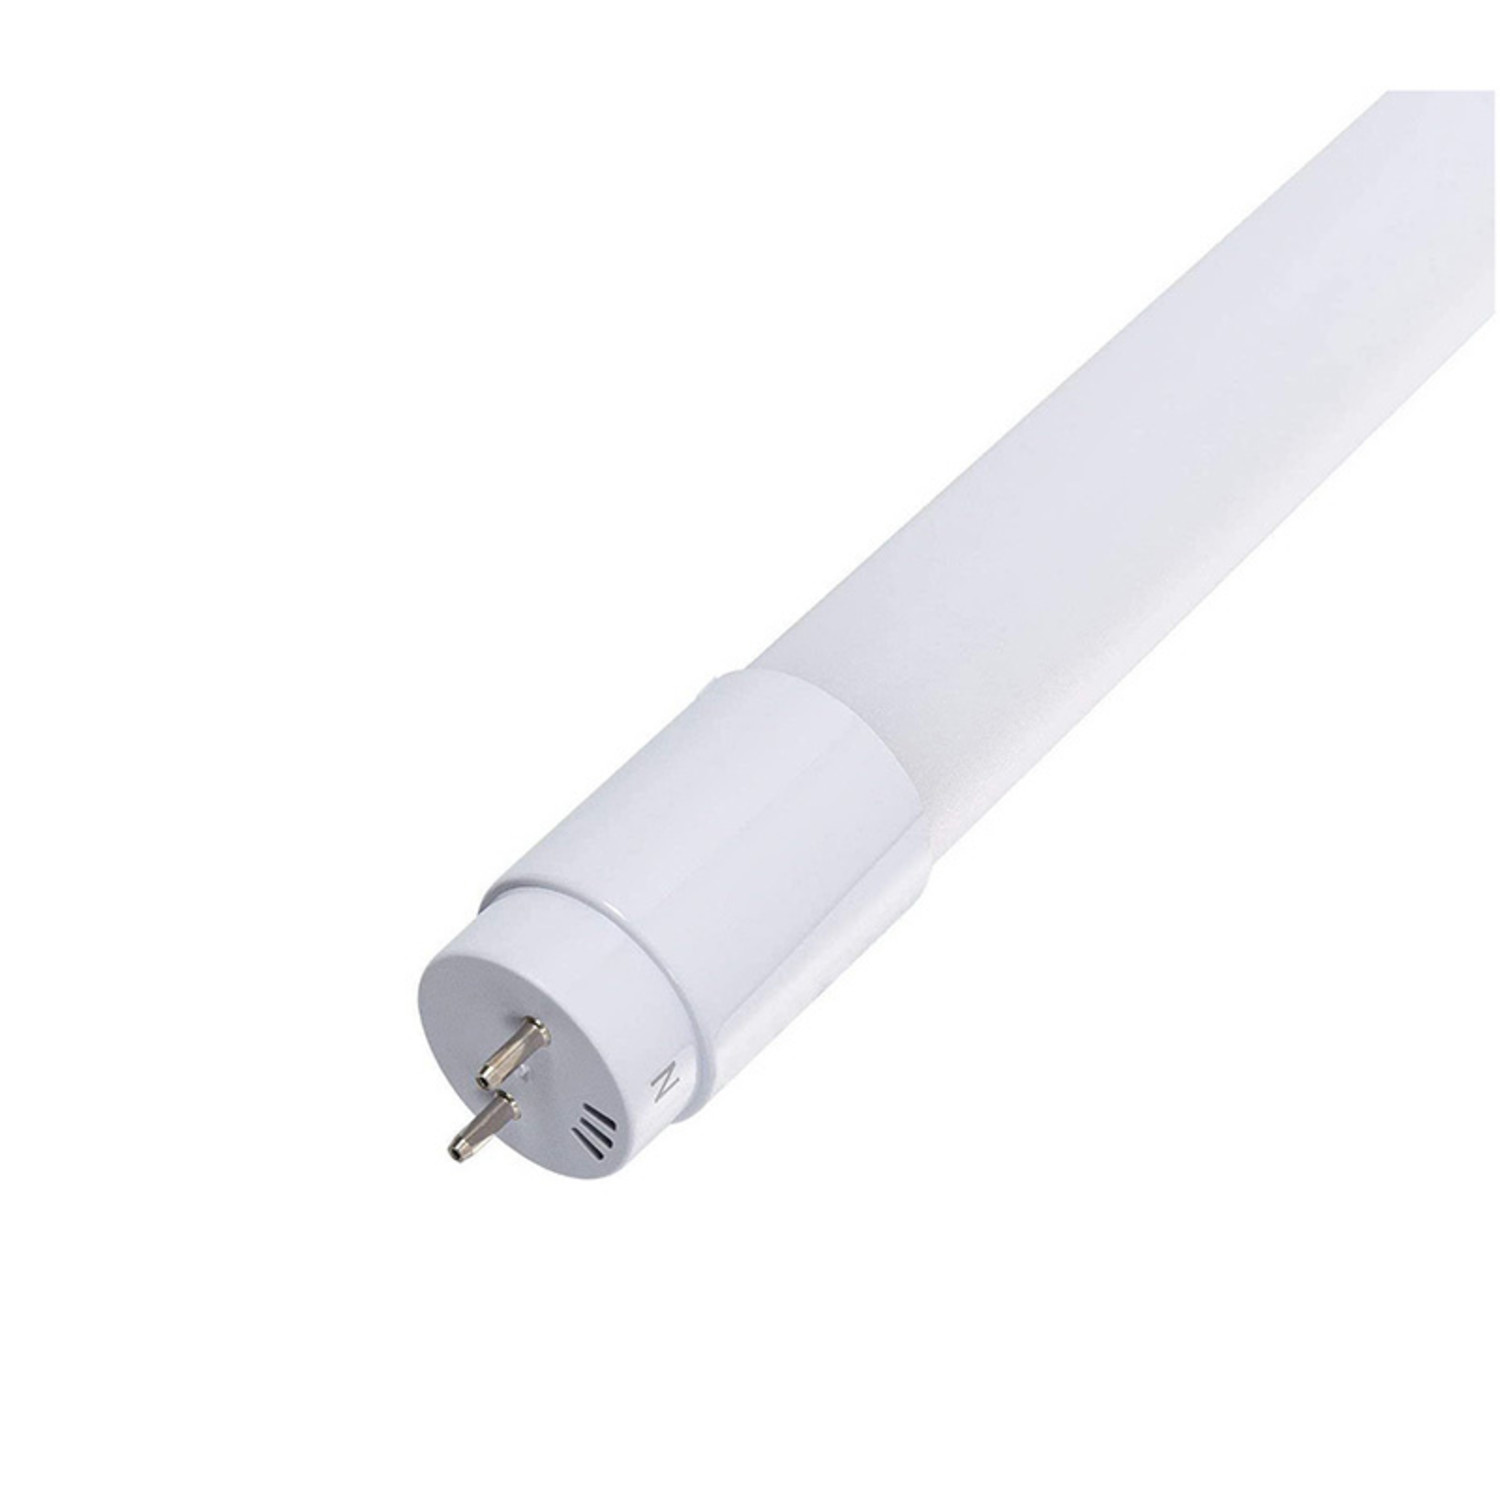 Wanten Mand Ongelijkheid LED TL buis 60cm - 10W vervangt 18W - 6400K (865) daglicht wit -  Ledlichtdiscounter.nl